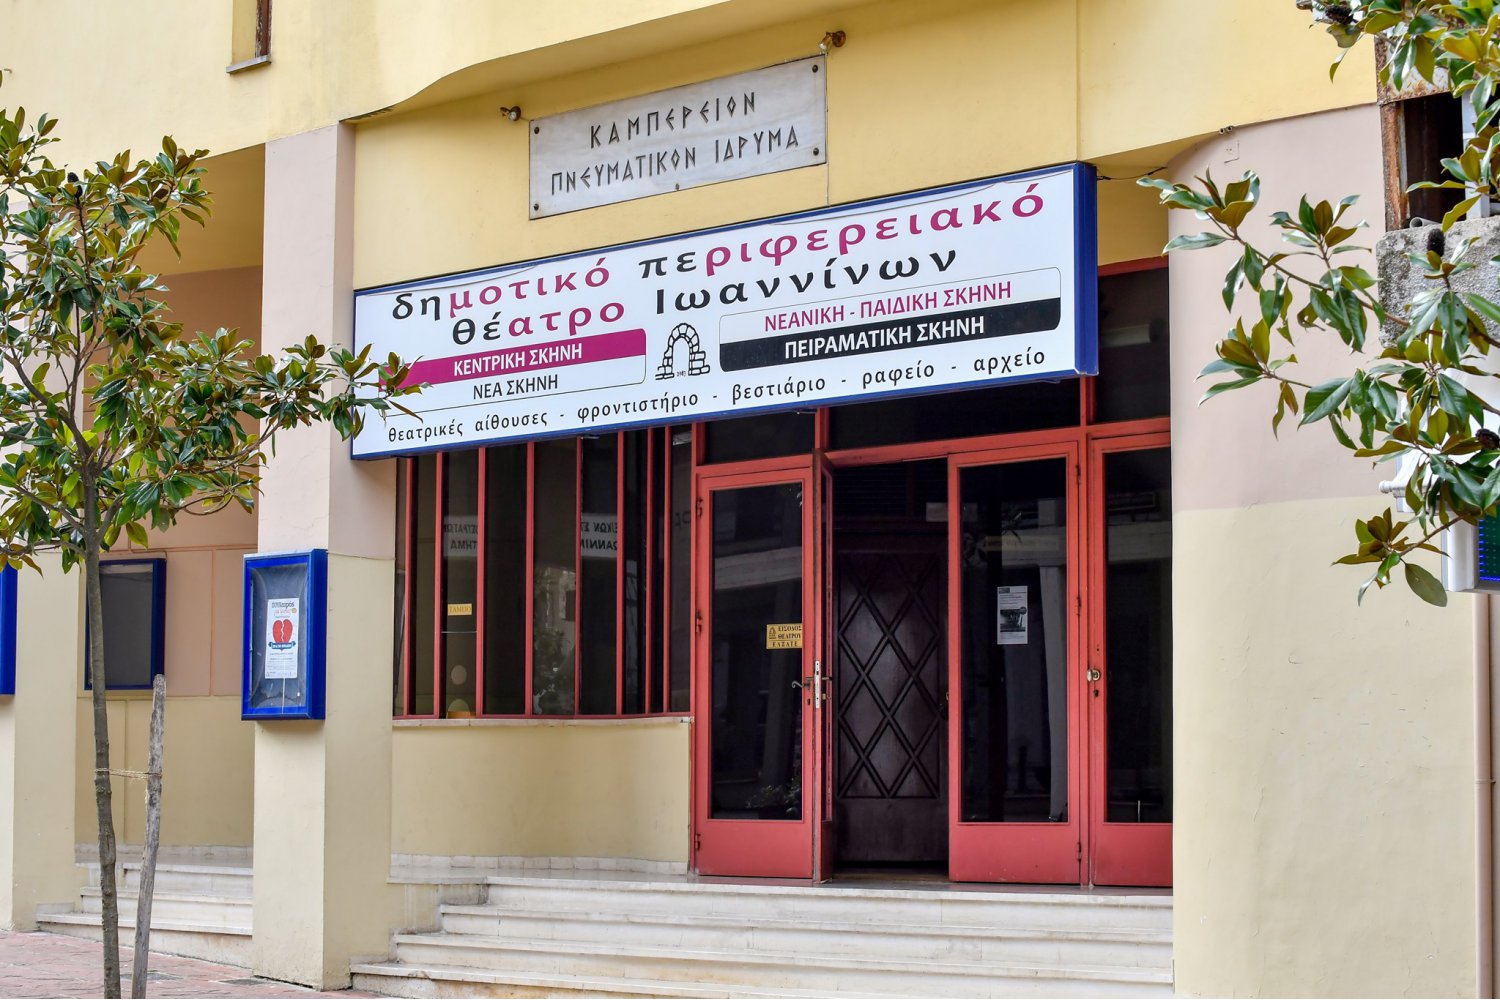 Municipal Regional Theatre of Ioannina